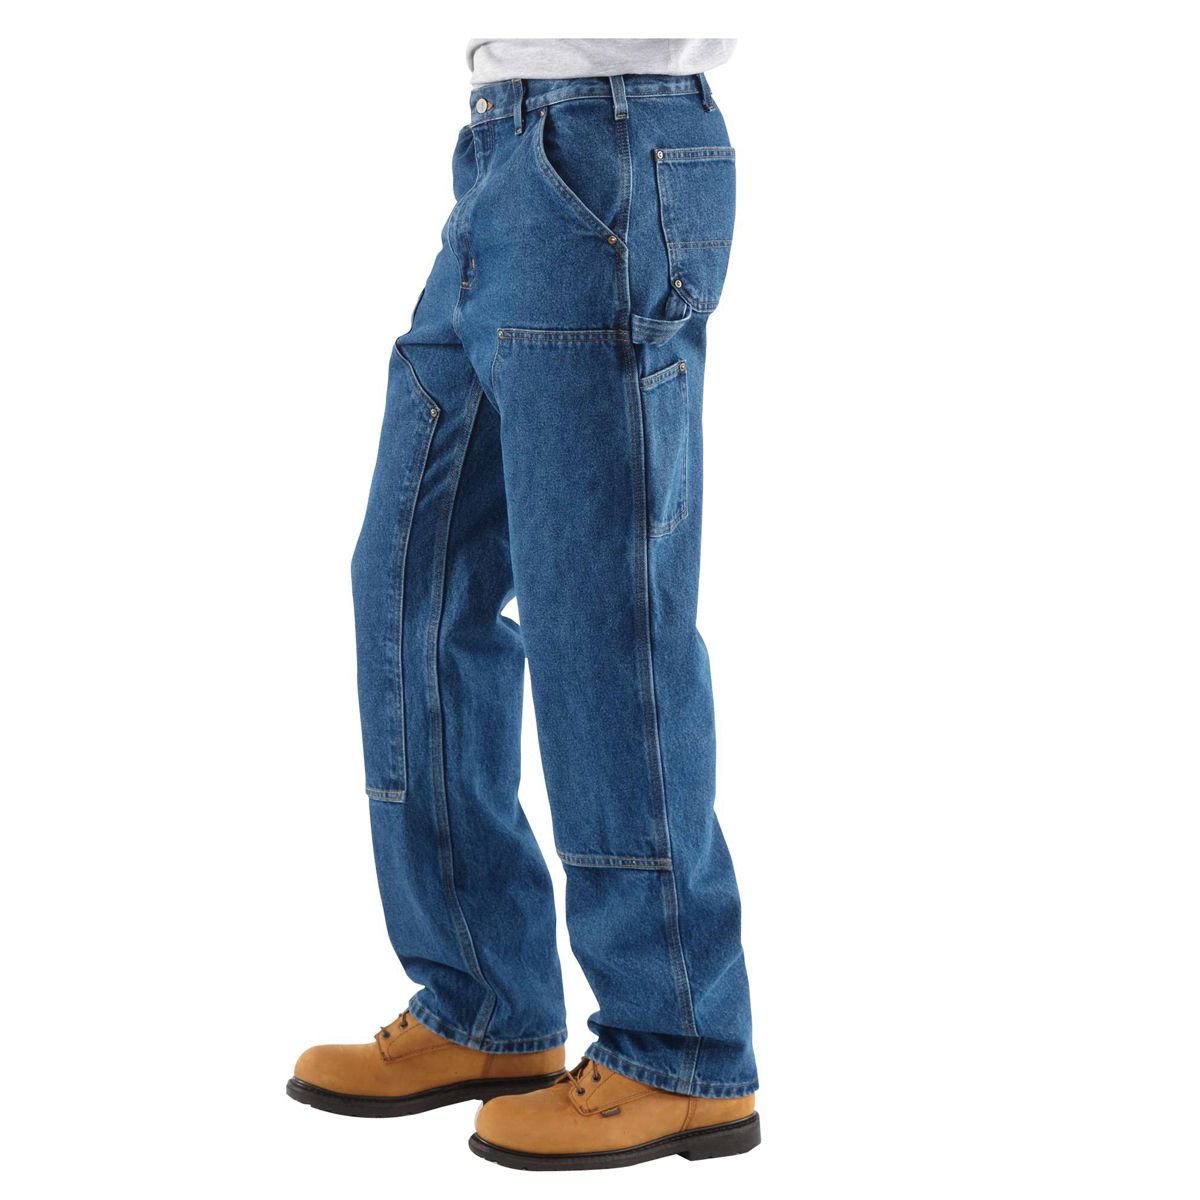 Carhartt B73-DST-34X34 Utility Logger Jeans, 34 in Waist, 34 in L Inseam, Darkstone, Loose Fit - 8